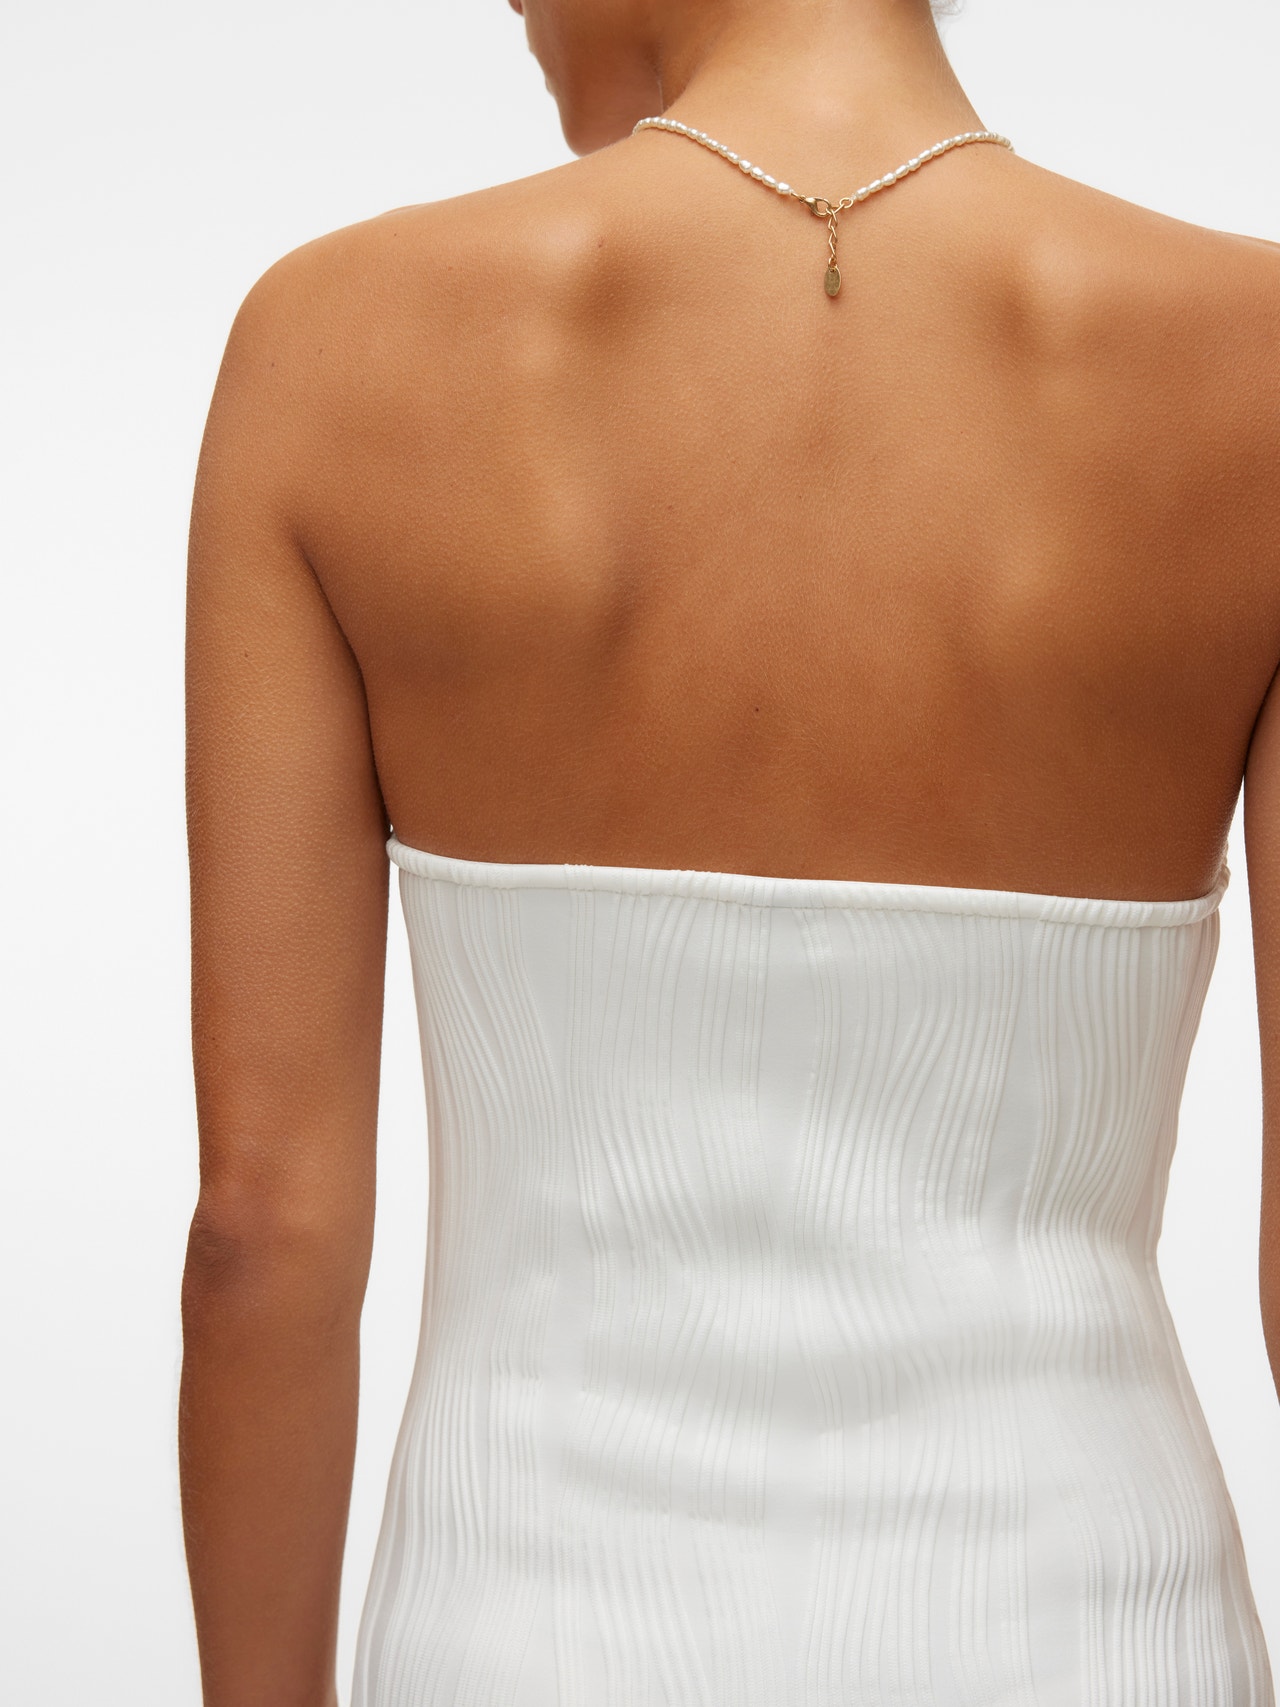 Vero Moda VMCORA Vestido largo -Blanc de Blanc - 10304287